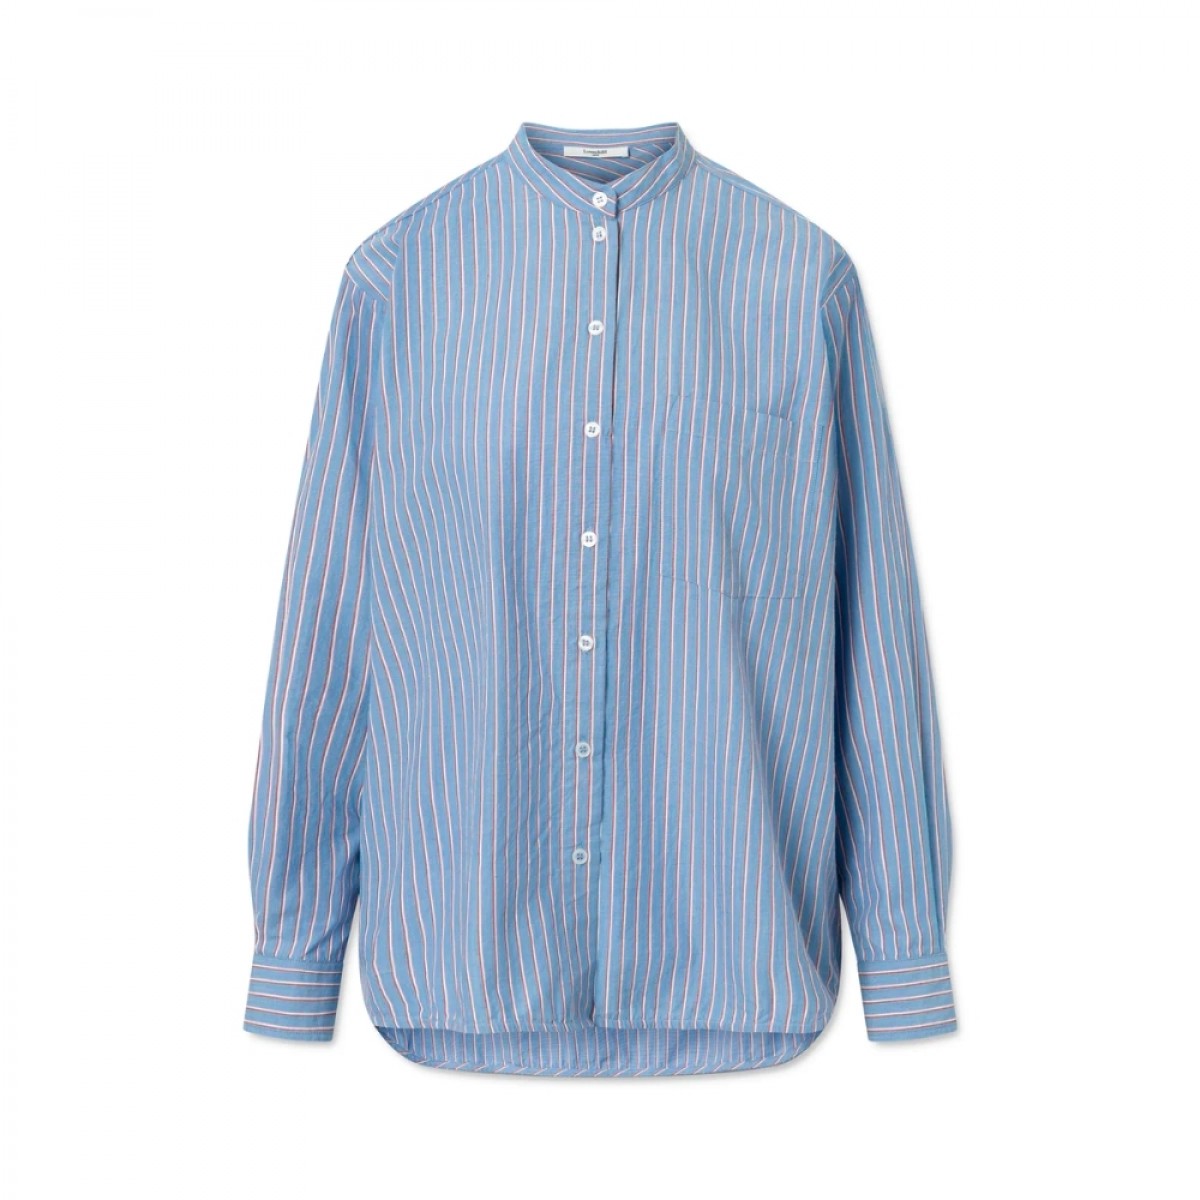 florentina shirt - blue stripe - front